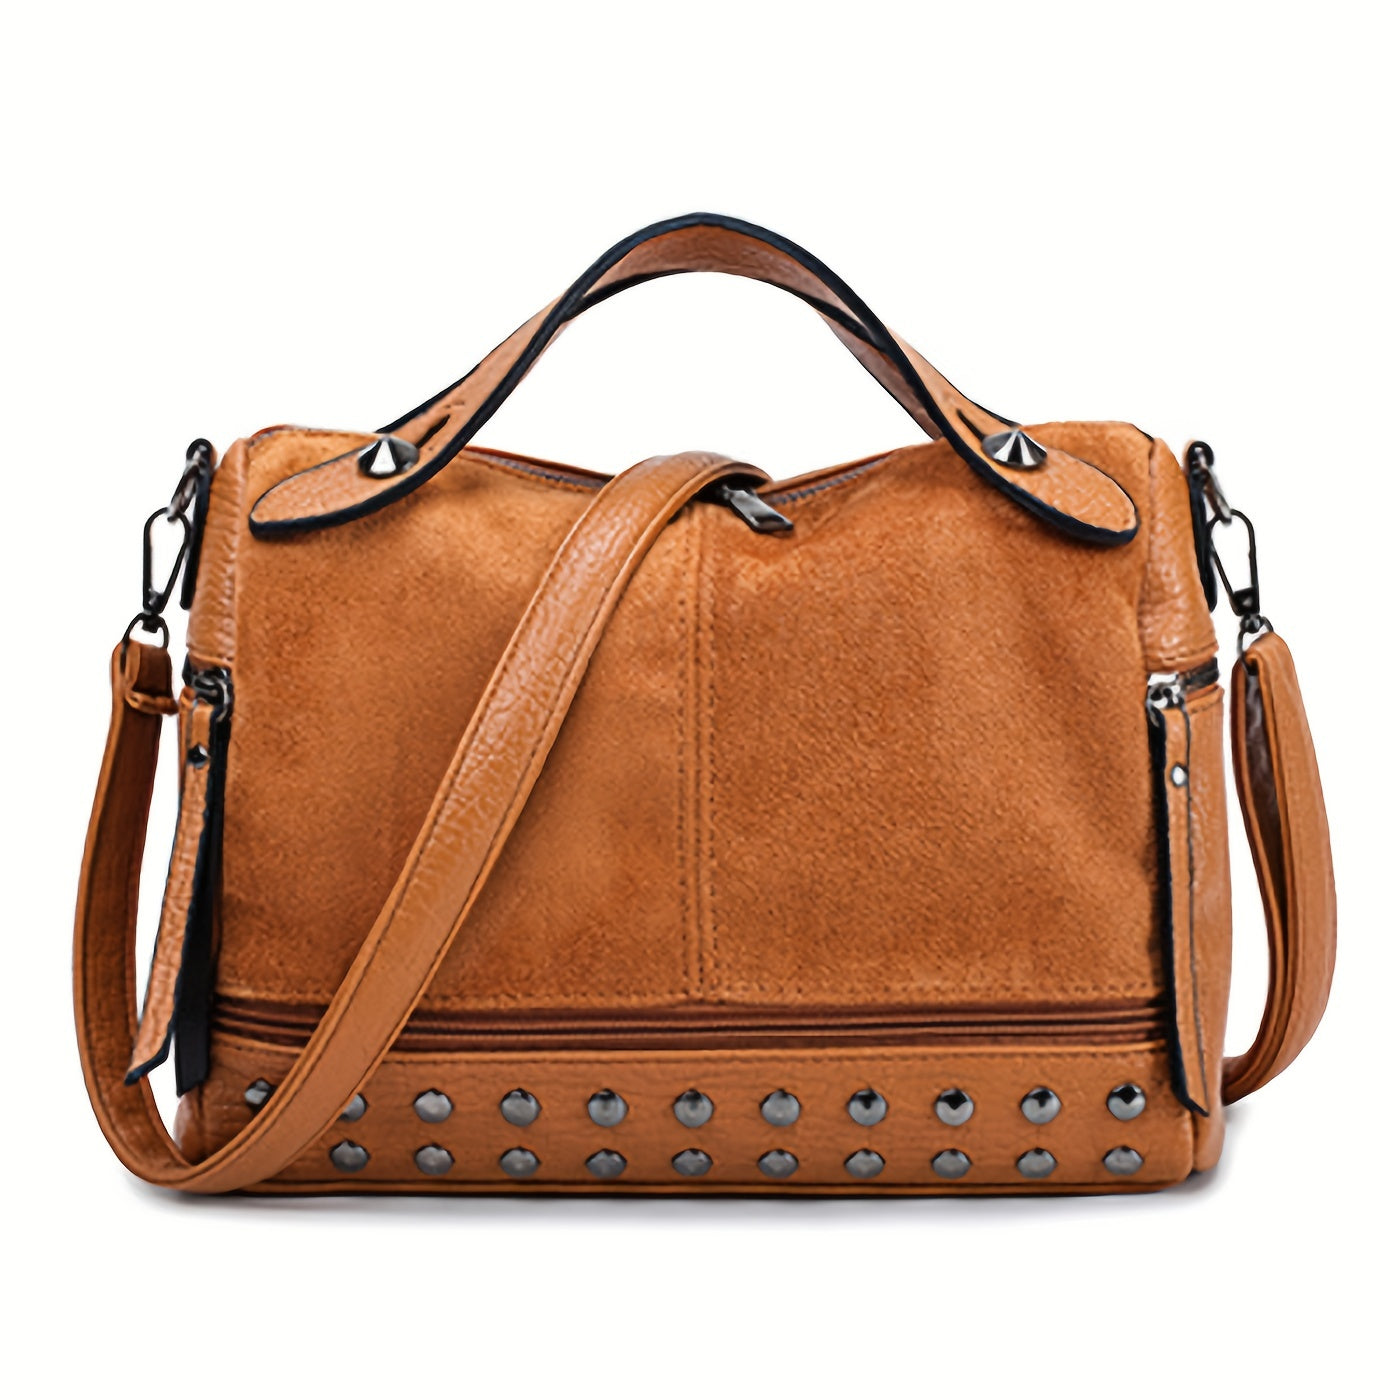 realaiot  Retro Multi-pocket Crossbody Bag, PU Leather Solid Color Shoulder Bag, Perfect Messenger Bag For Everyday Use